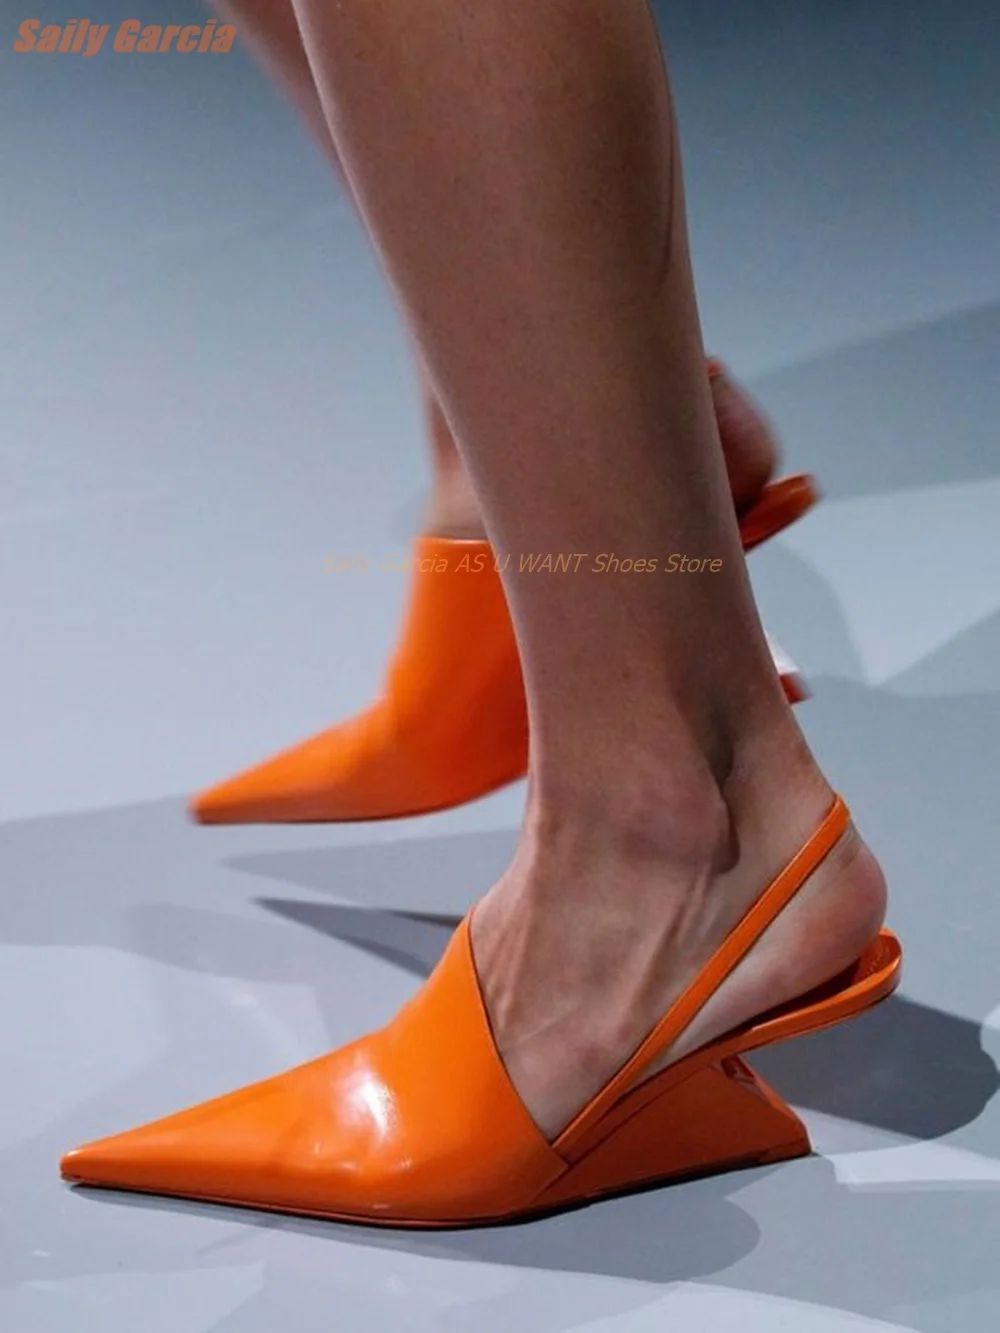 

Strange Heel Back Strap Sandals Patent Leather Pointed Toe Orange Black Floating Women Shoes Fashion New Arrival Catwalk